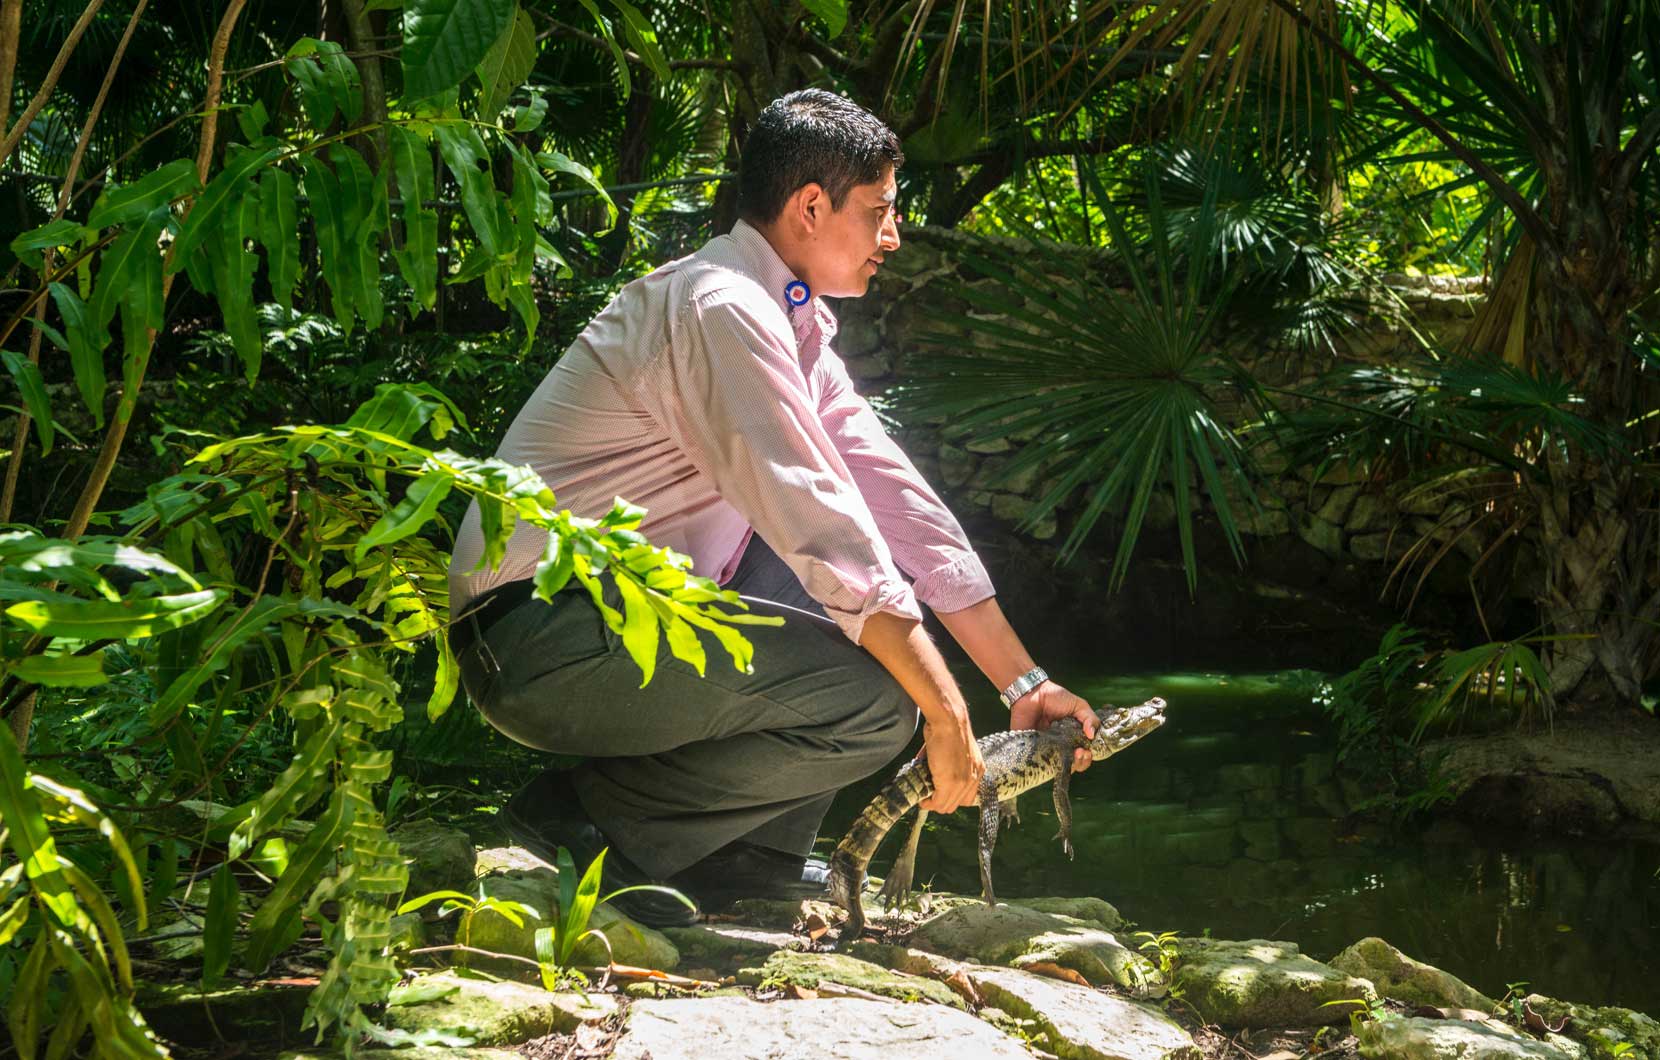 The crocodiles are original residents of the region—Vidanta helps ensure their habitat is protected